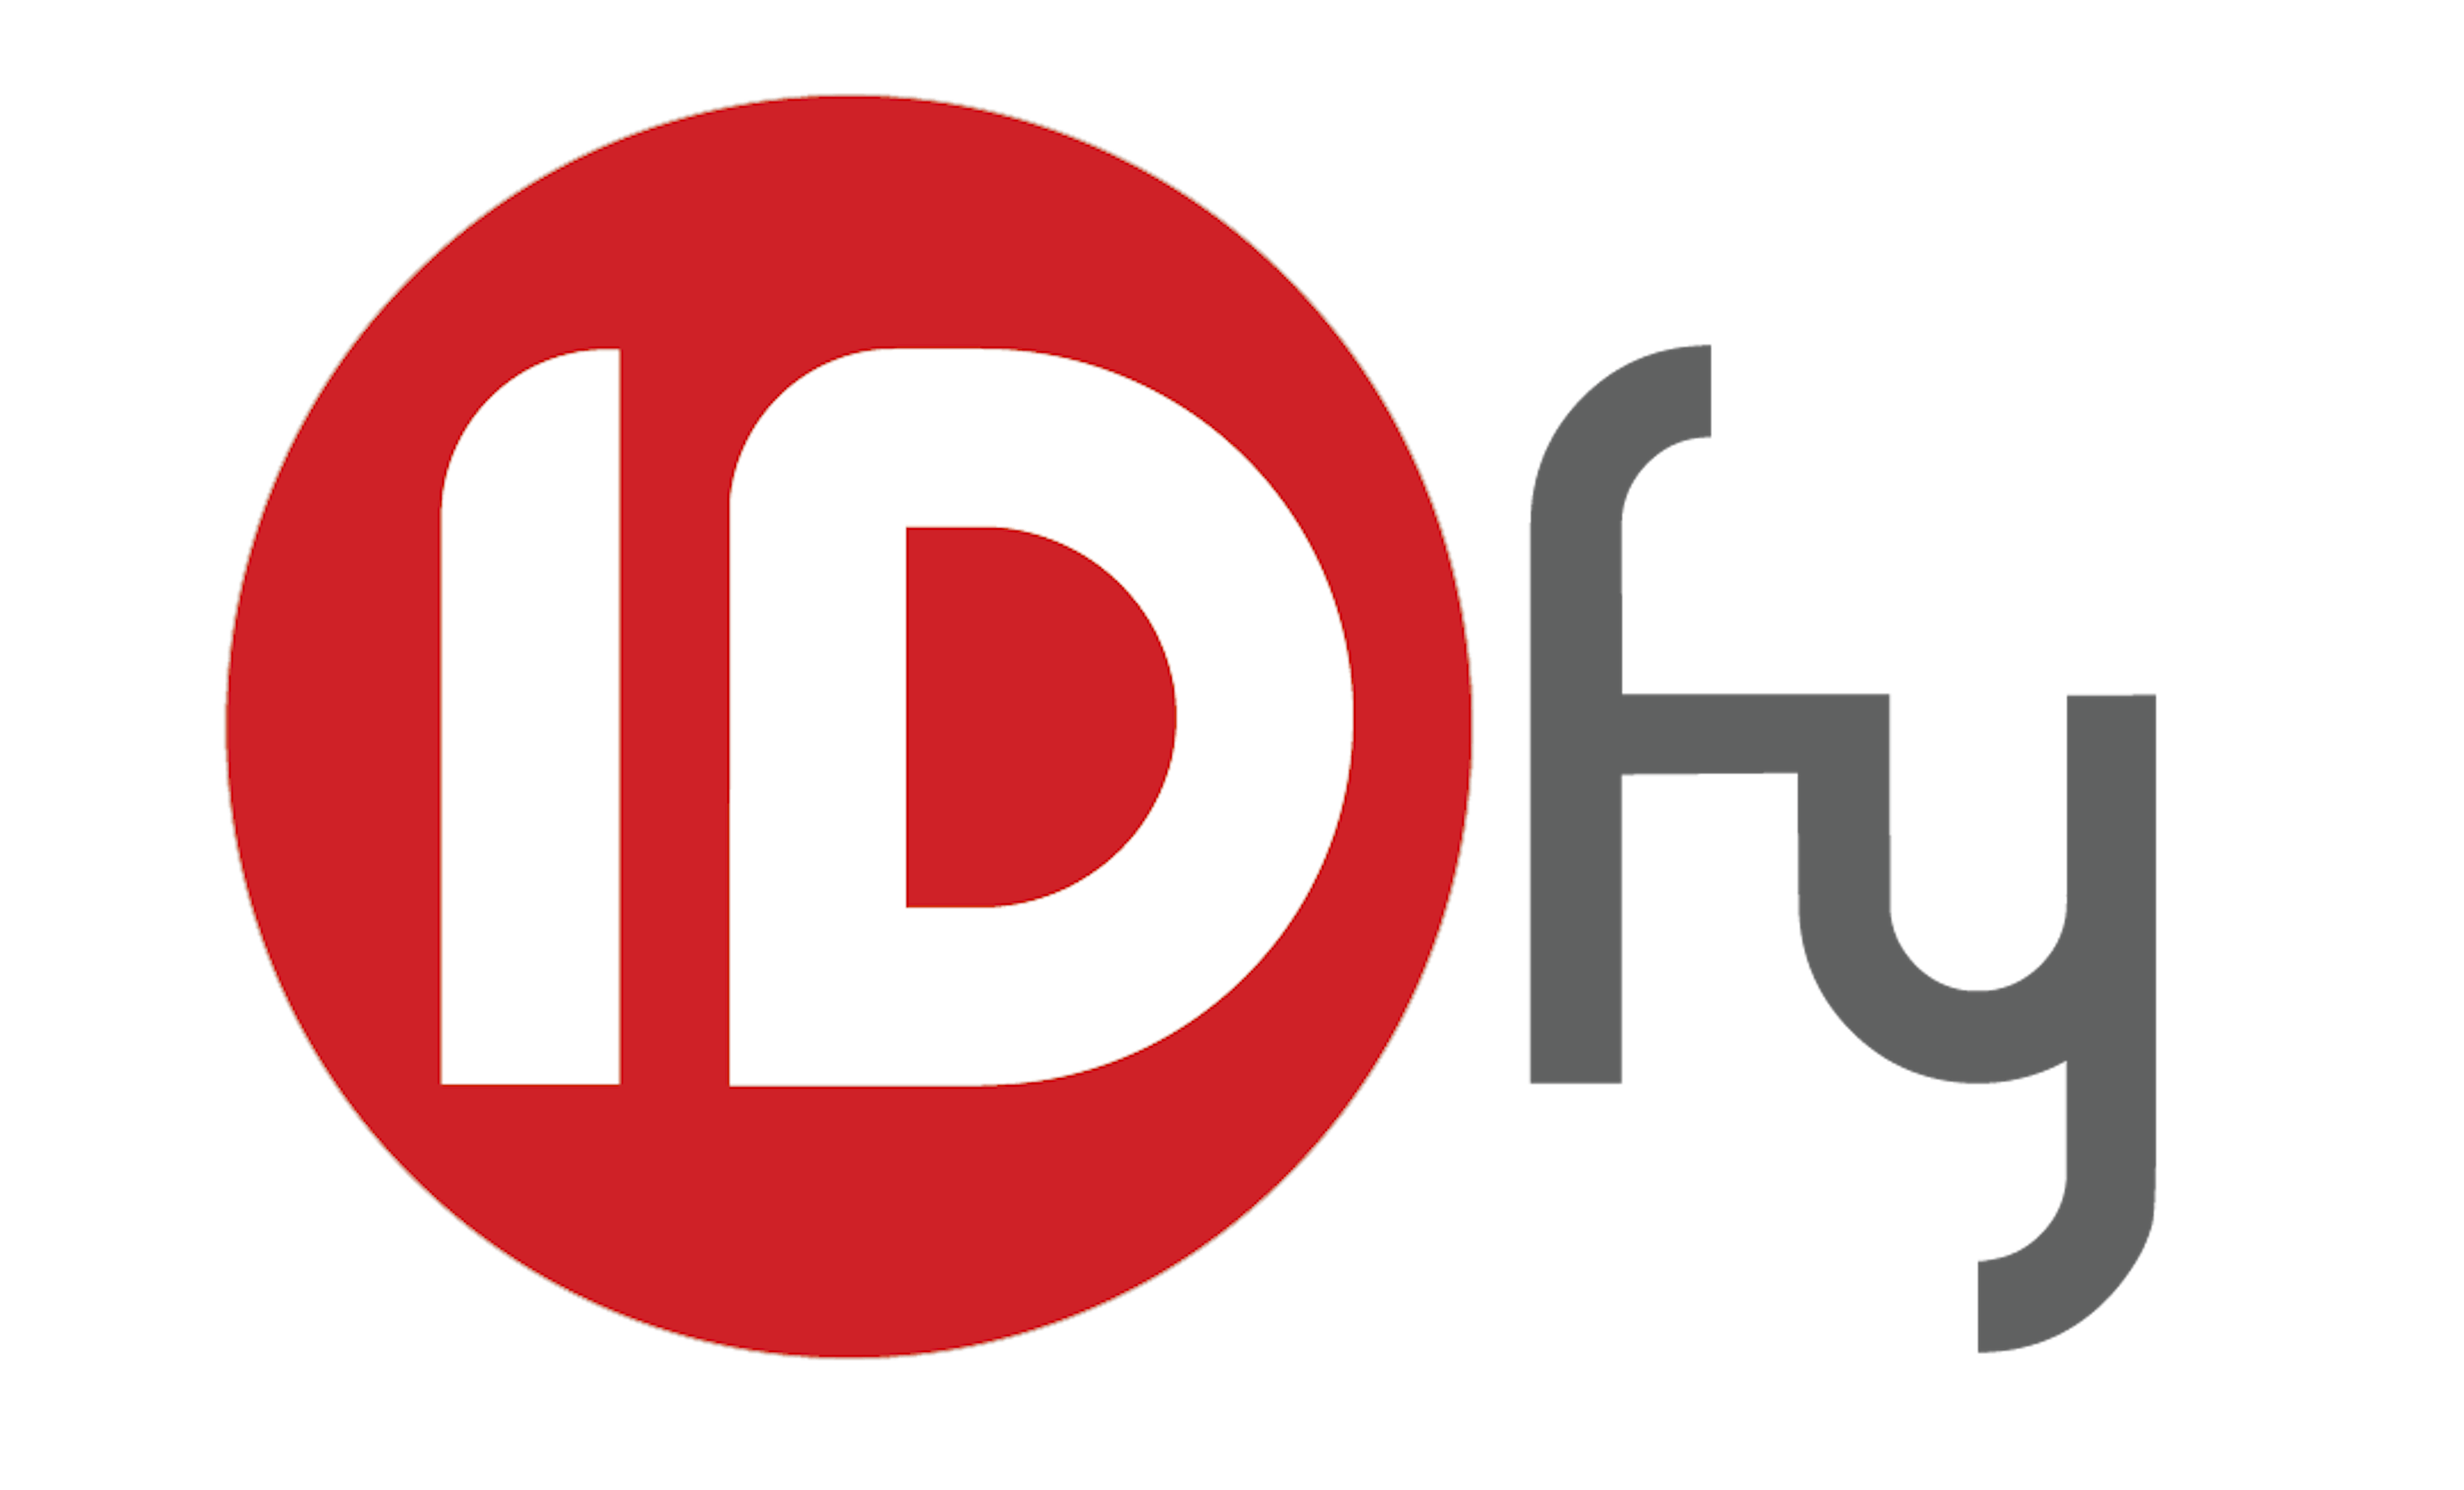 IDfy Logo